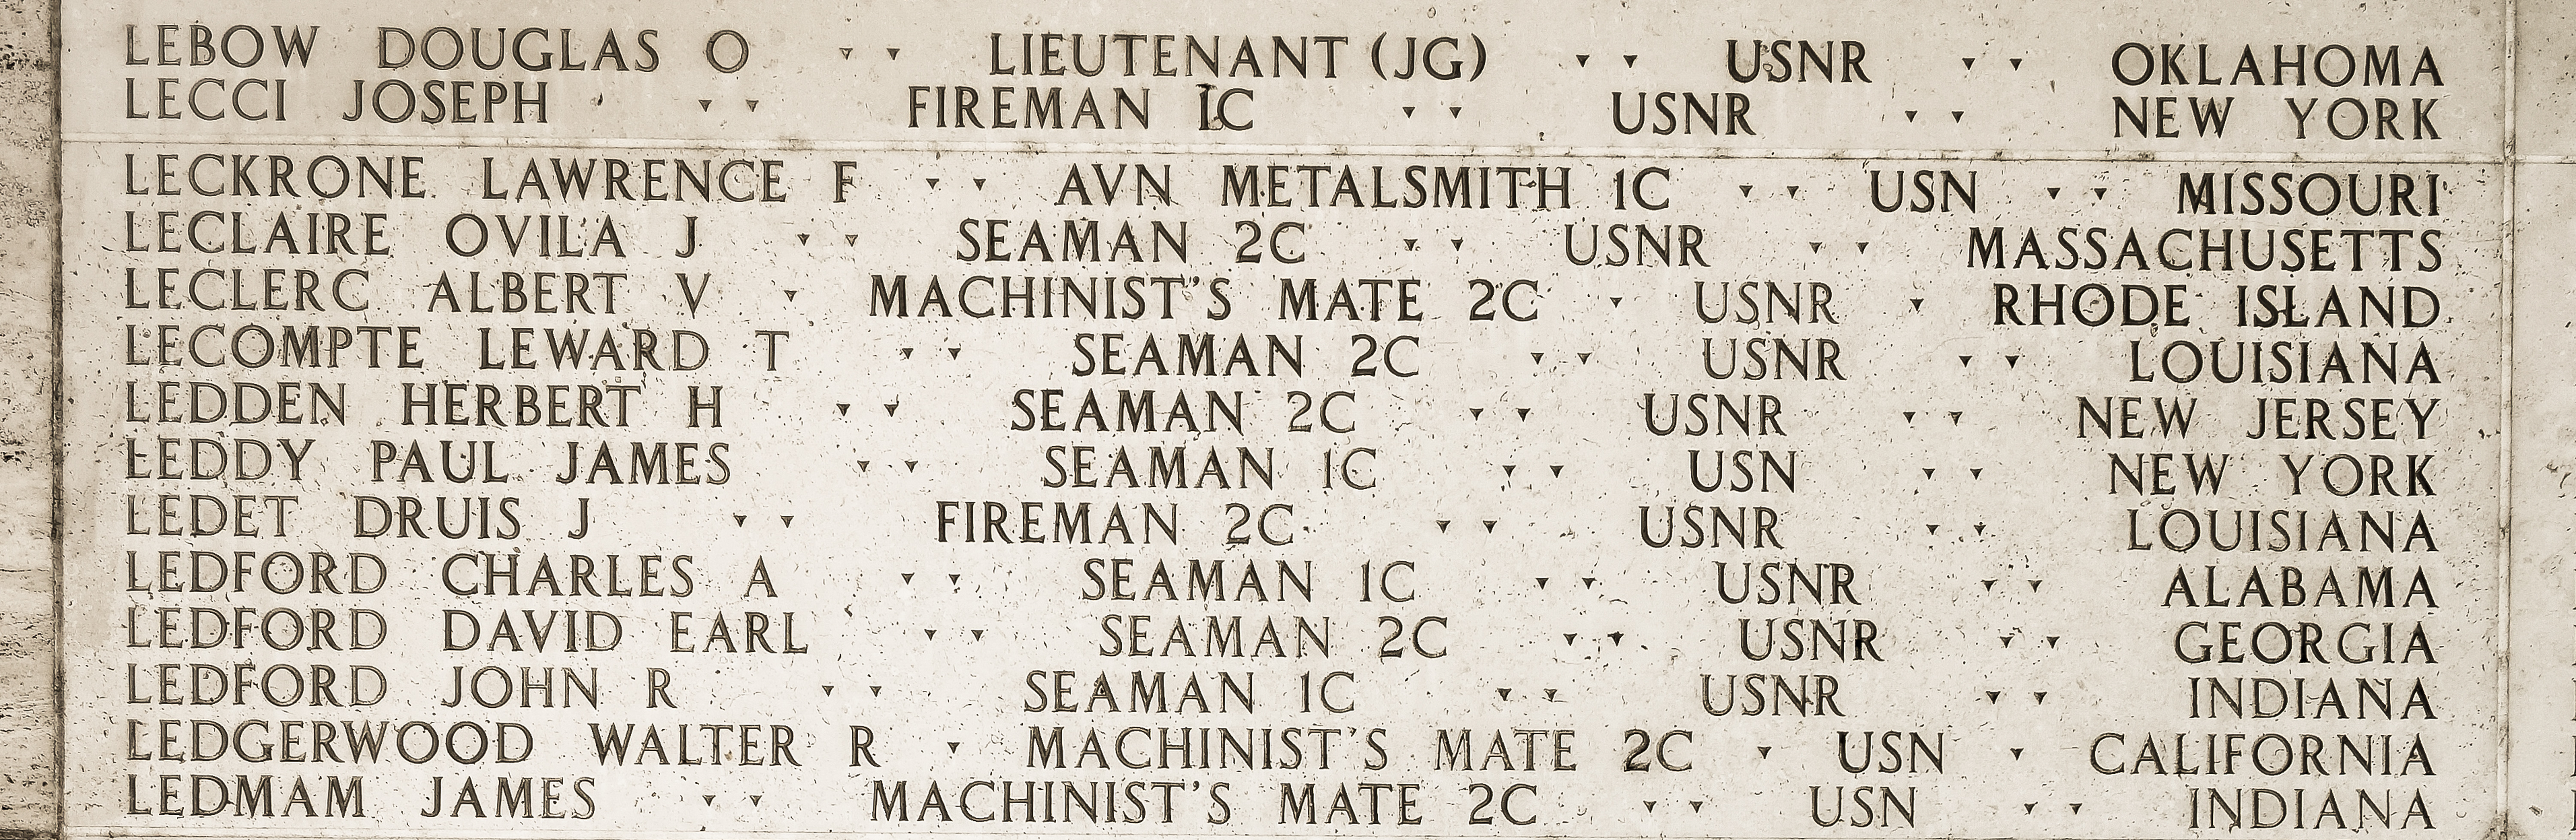 Leward T. Lecompte, Seaman Second Class